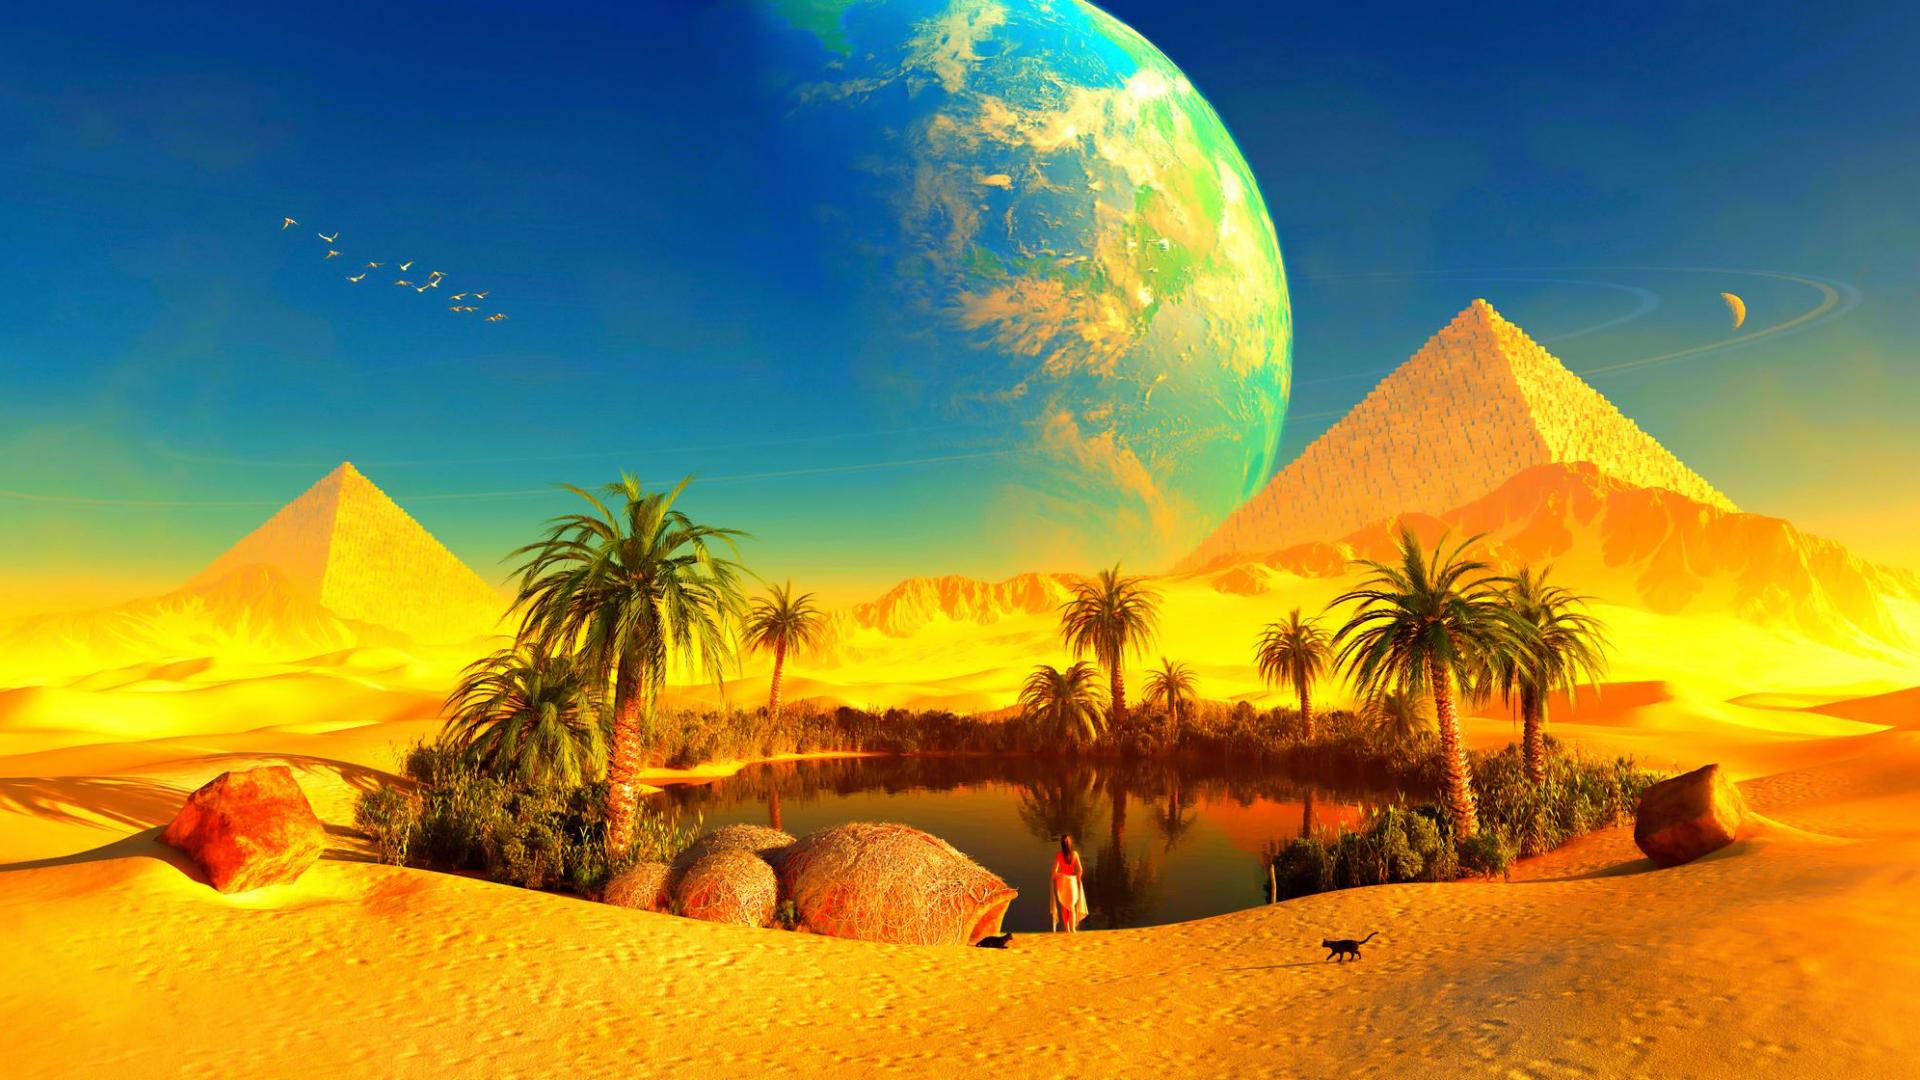 Cat Desert Oasis Planet Pyramid 1920x1080